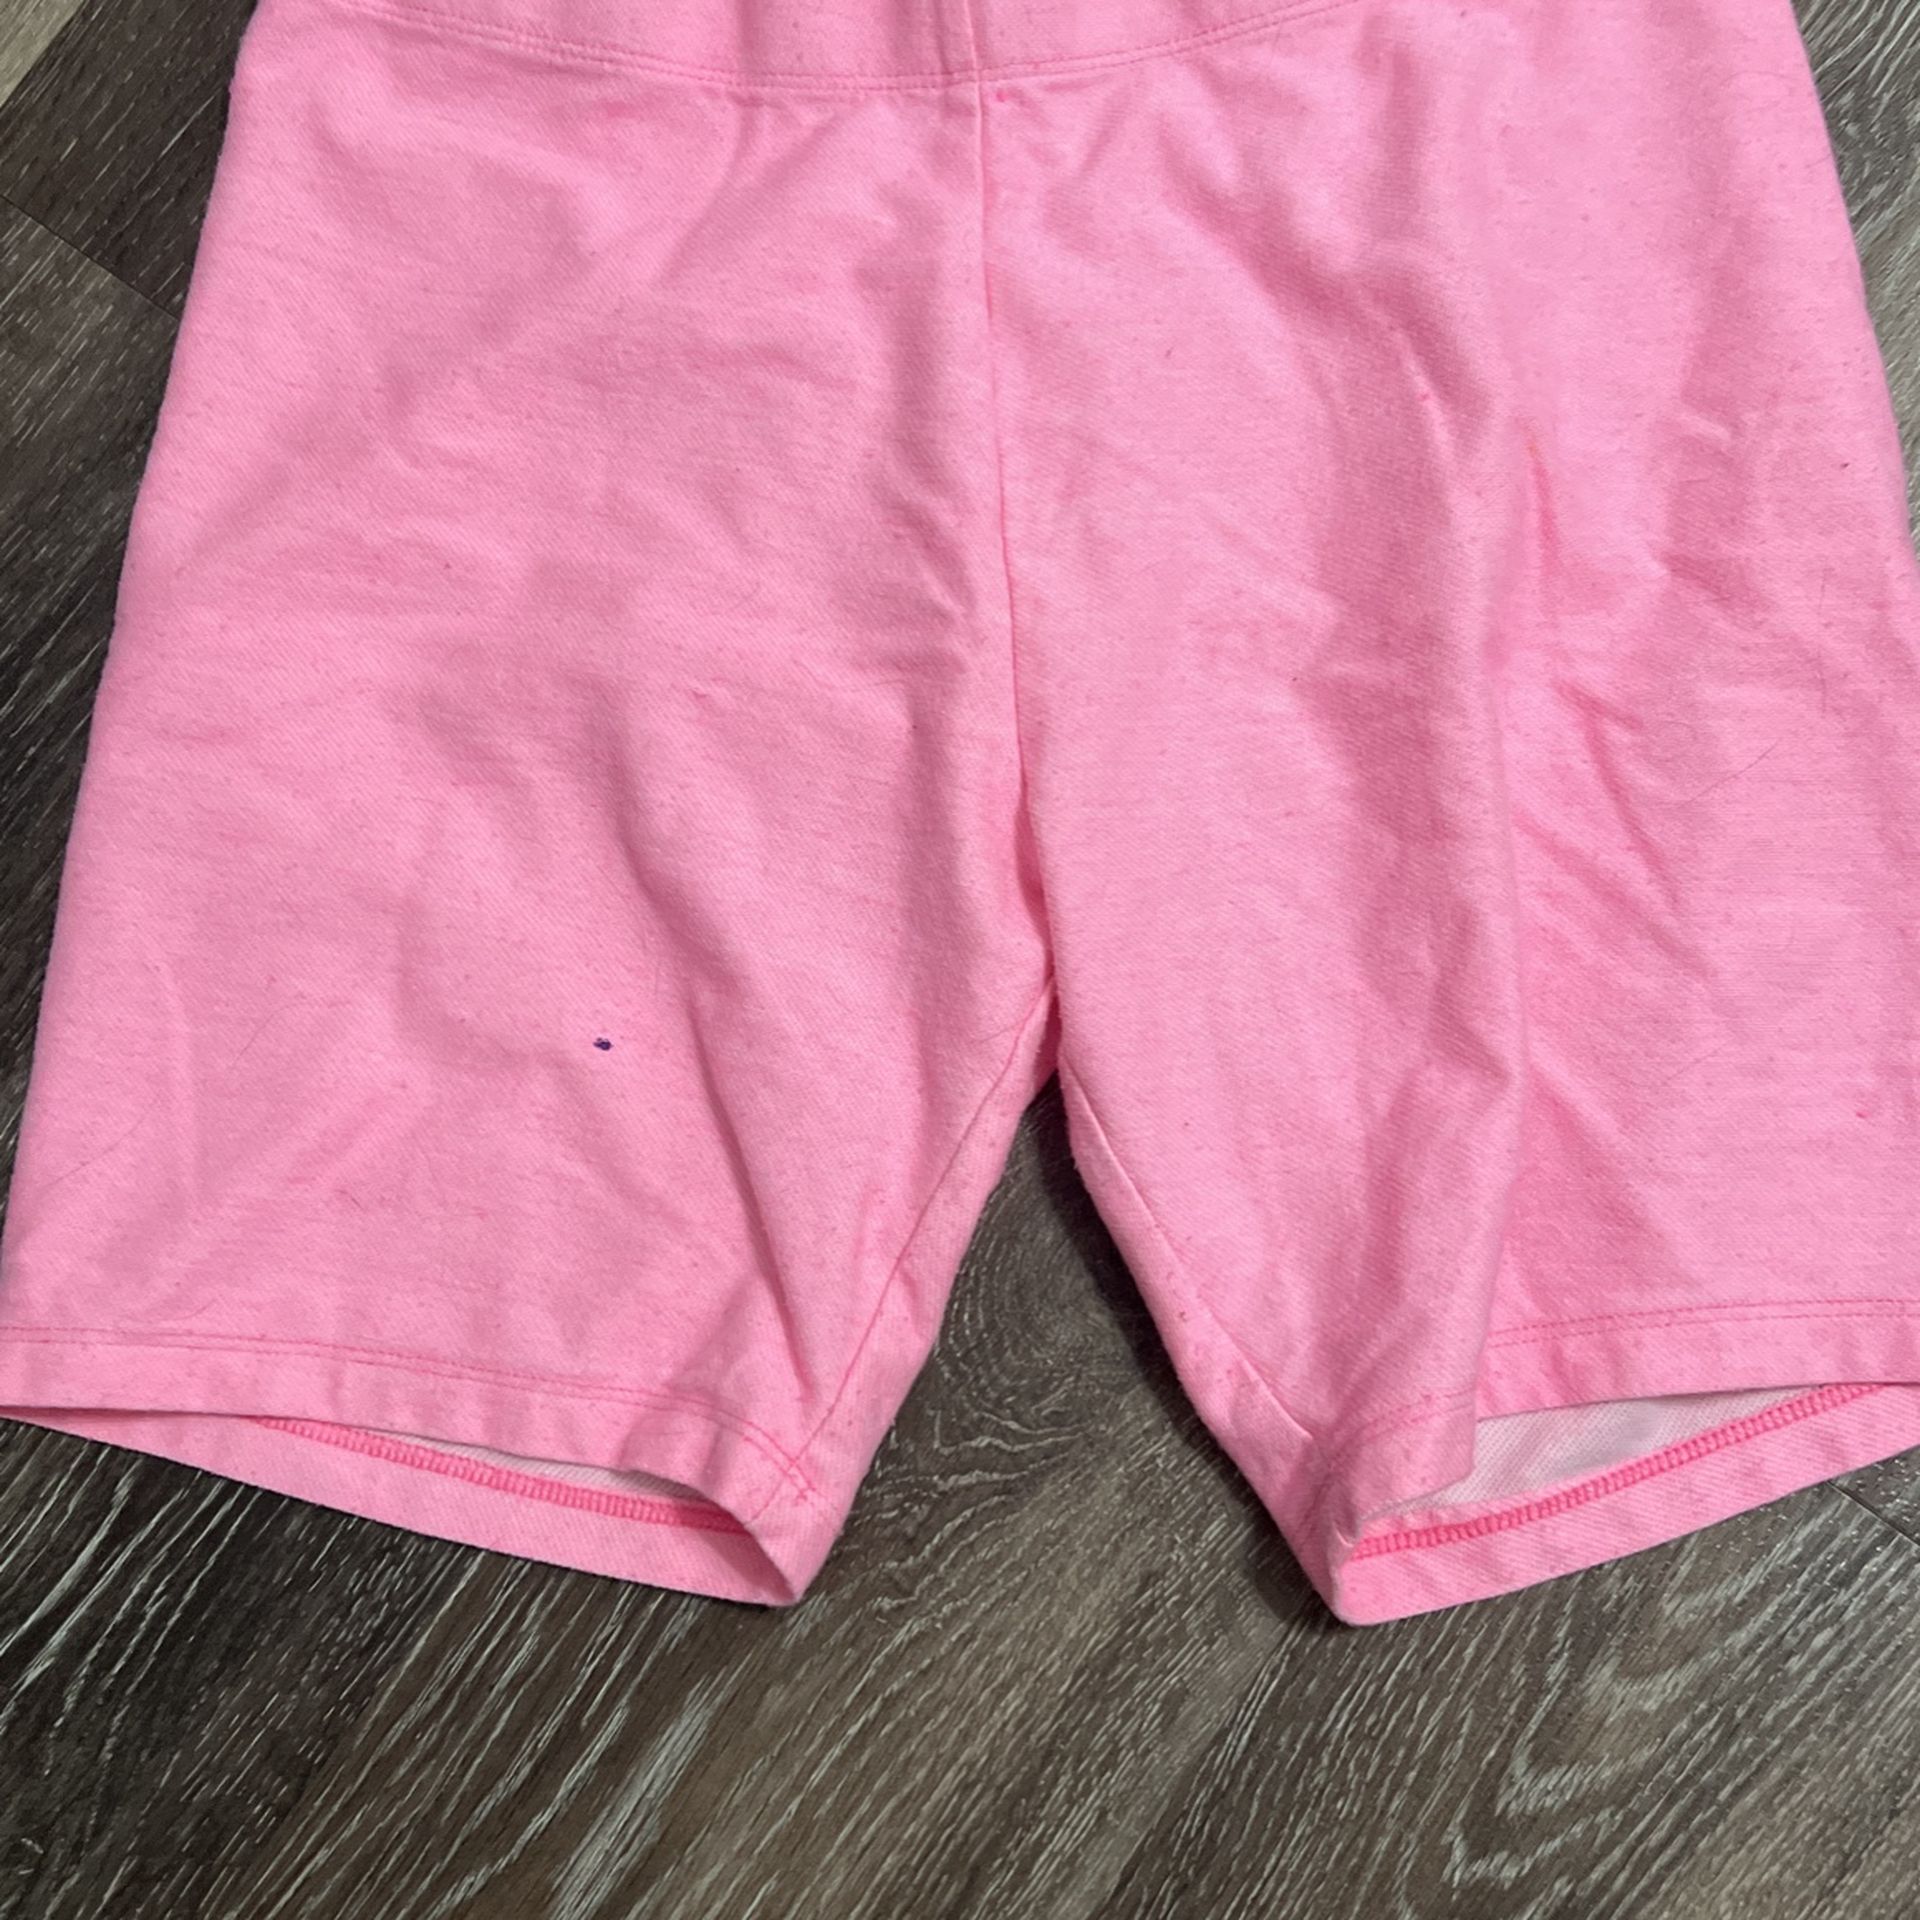 $1 Pink Shorts XL